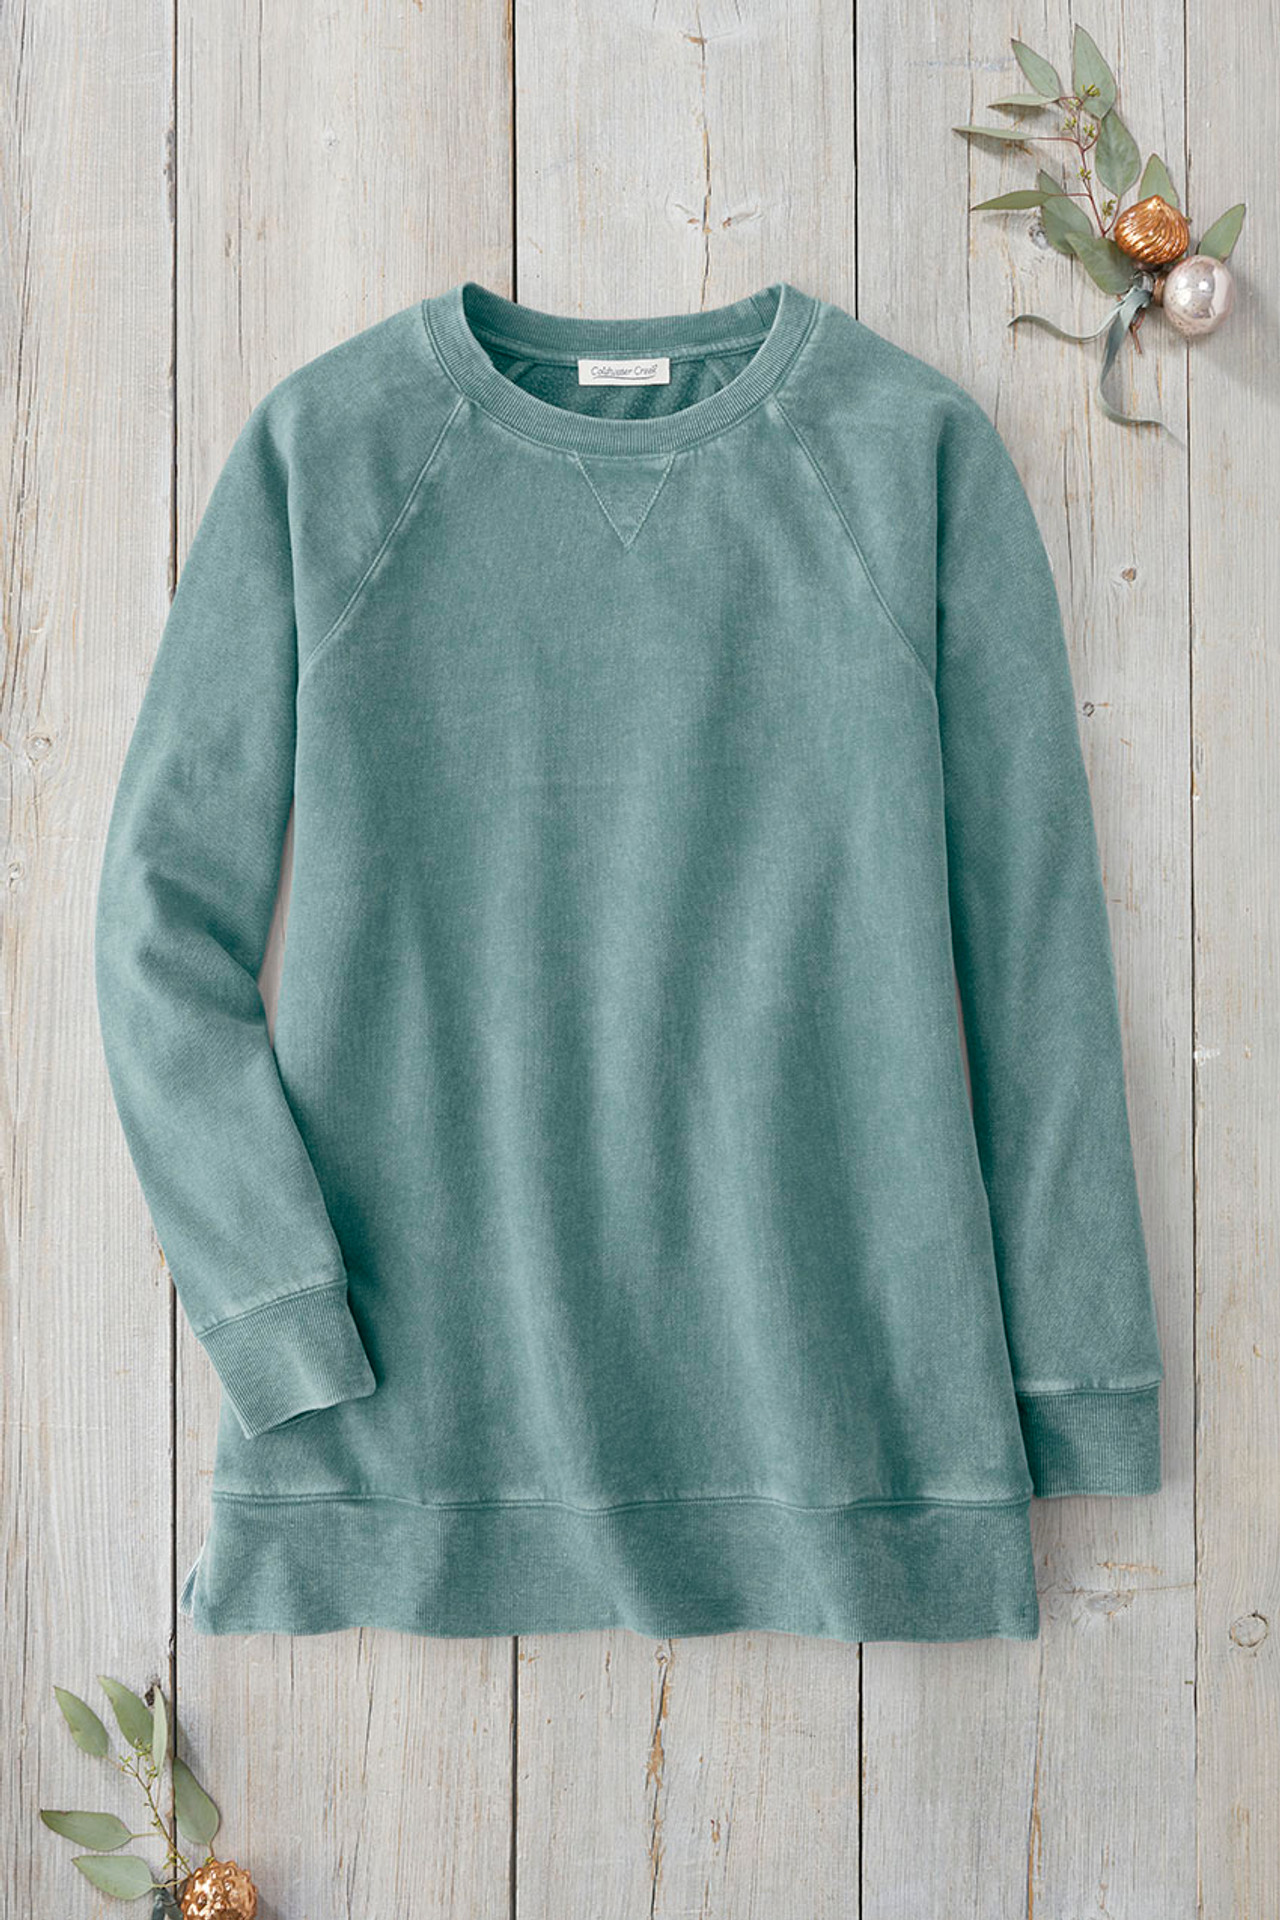 Colorwash Tunic Sweatshirt